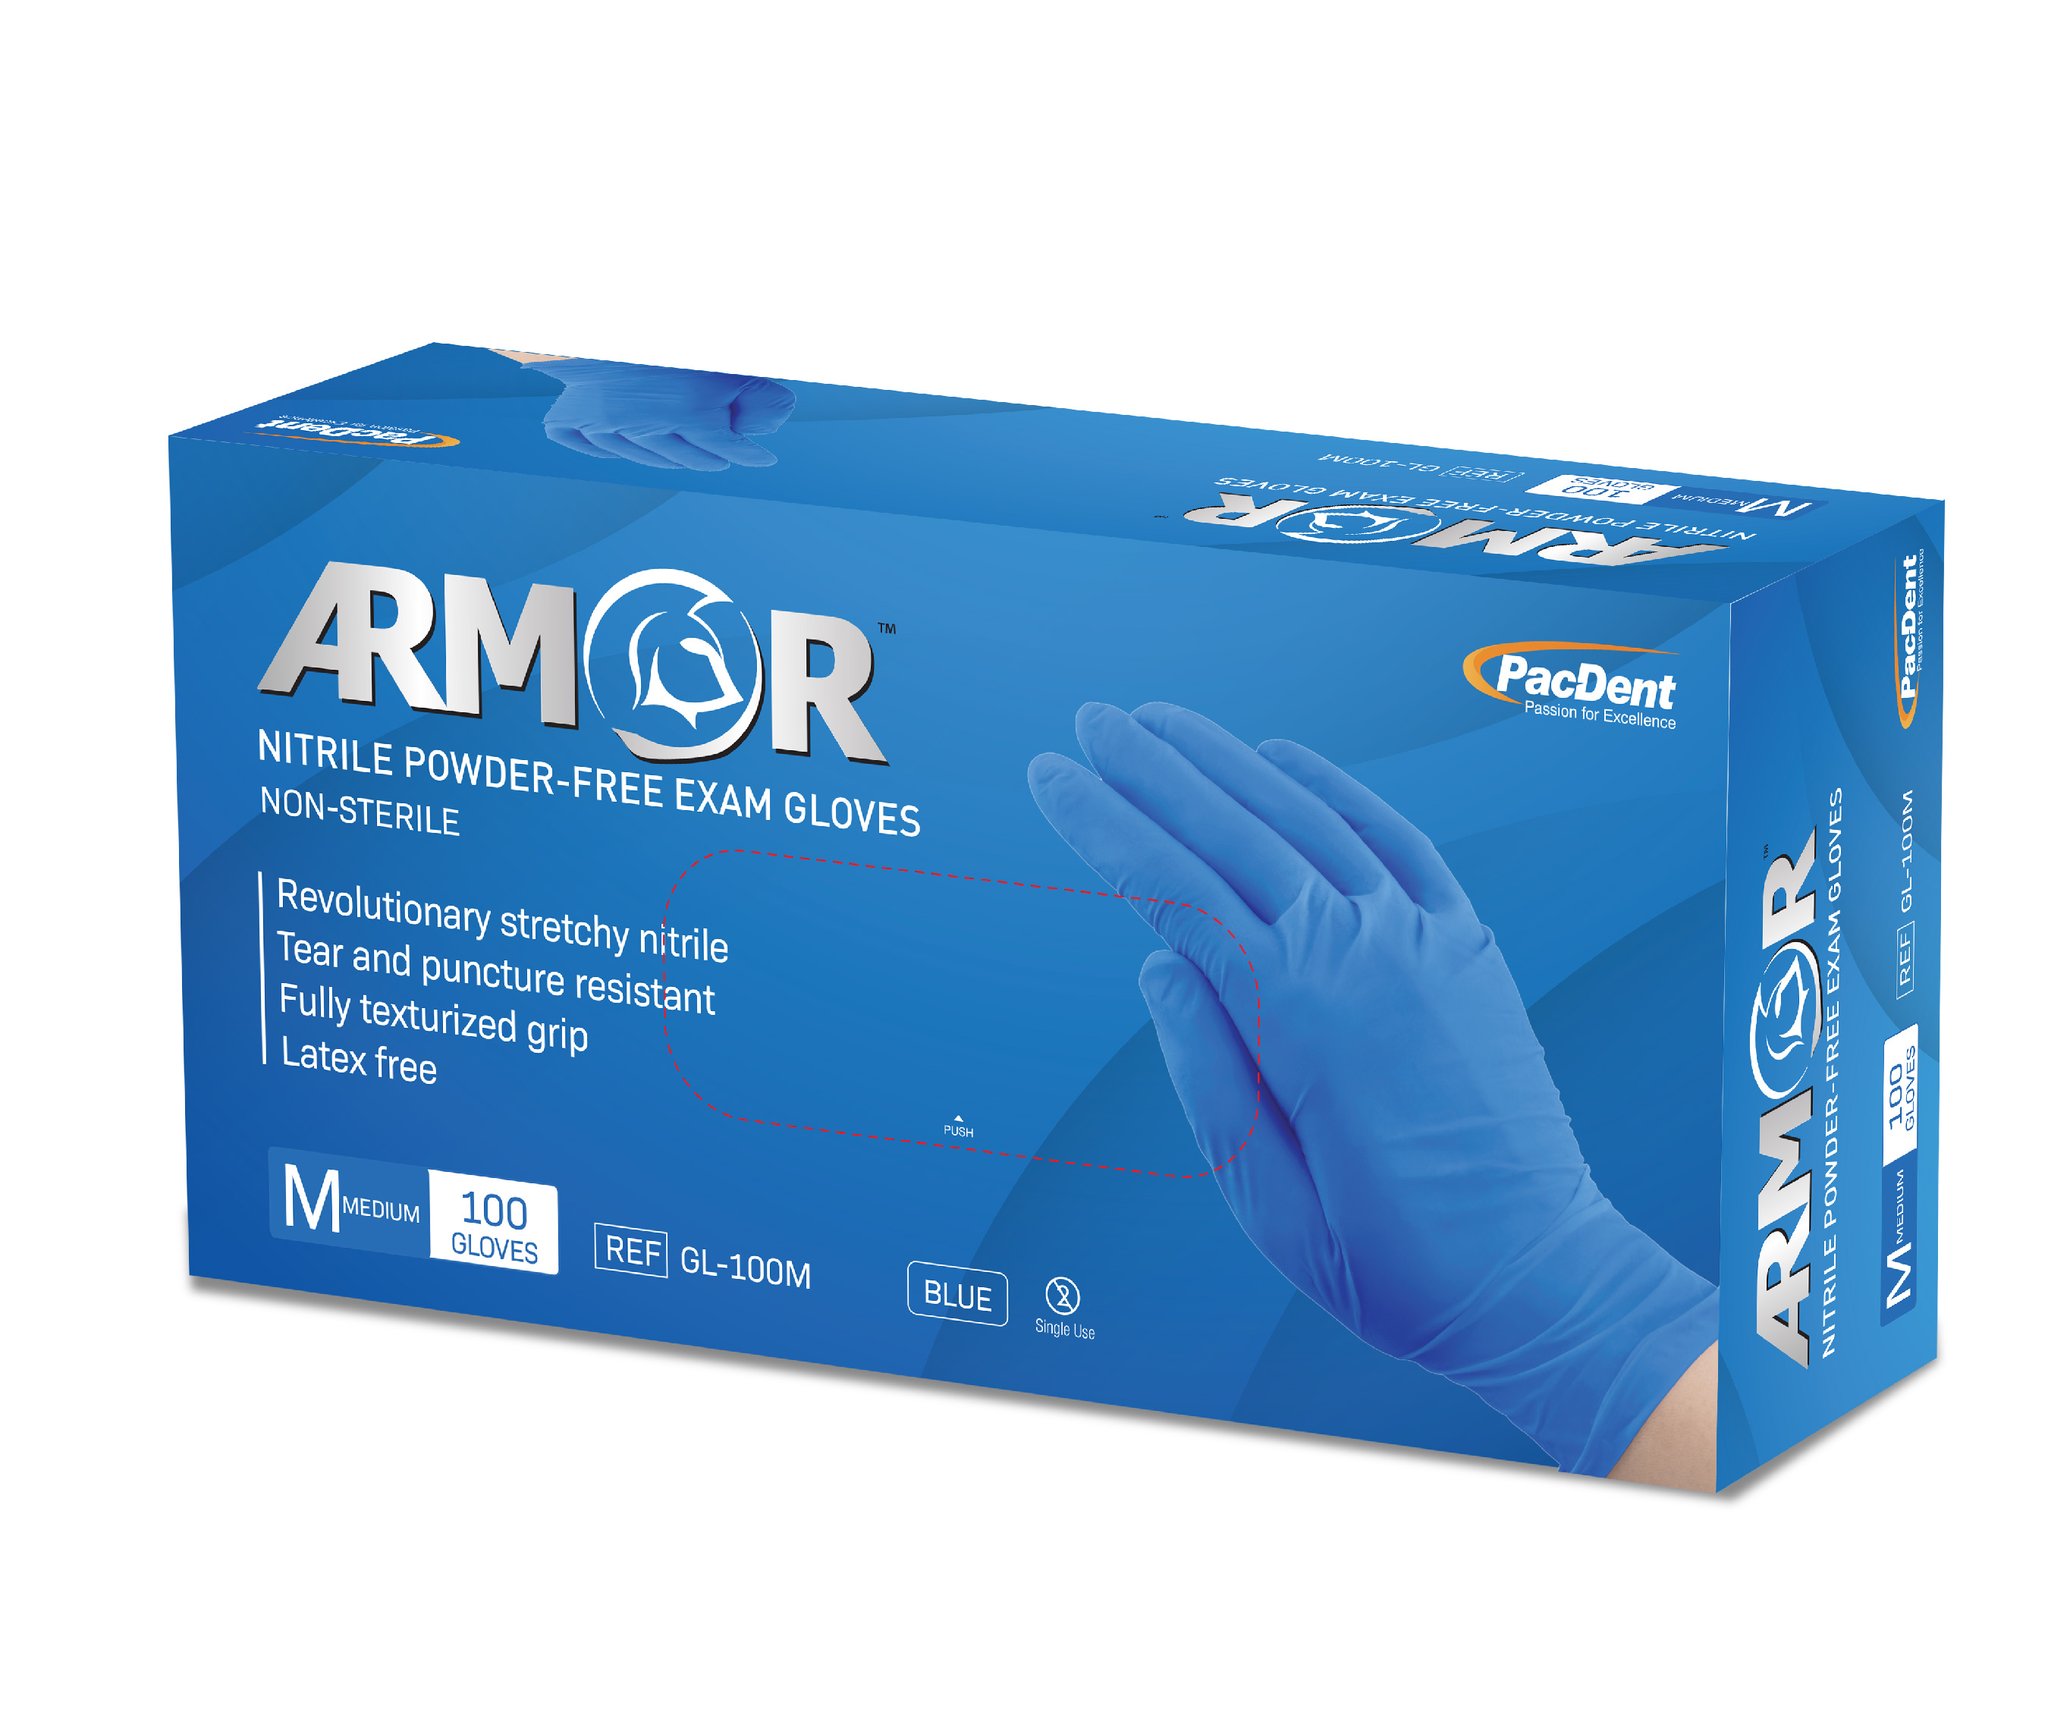 Pac-Dent Armor™ Nitrile Powder-Free Exam Gloves 100 pcs/box